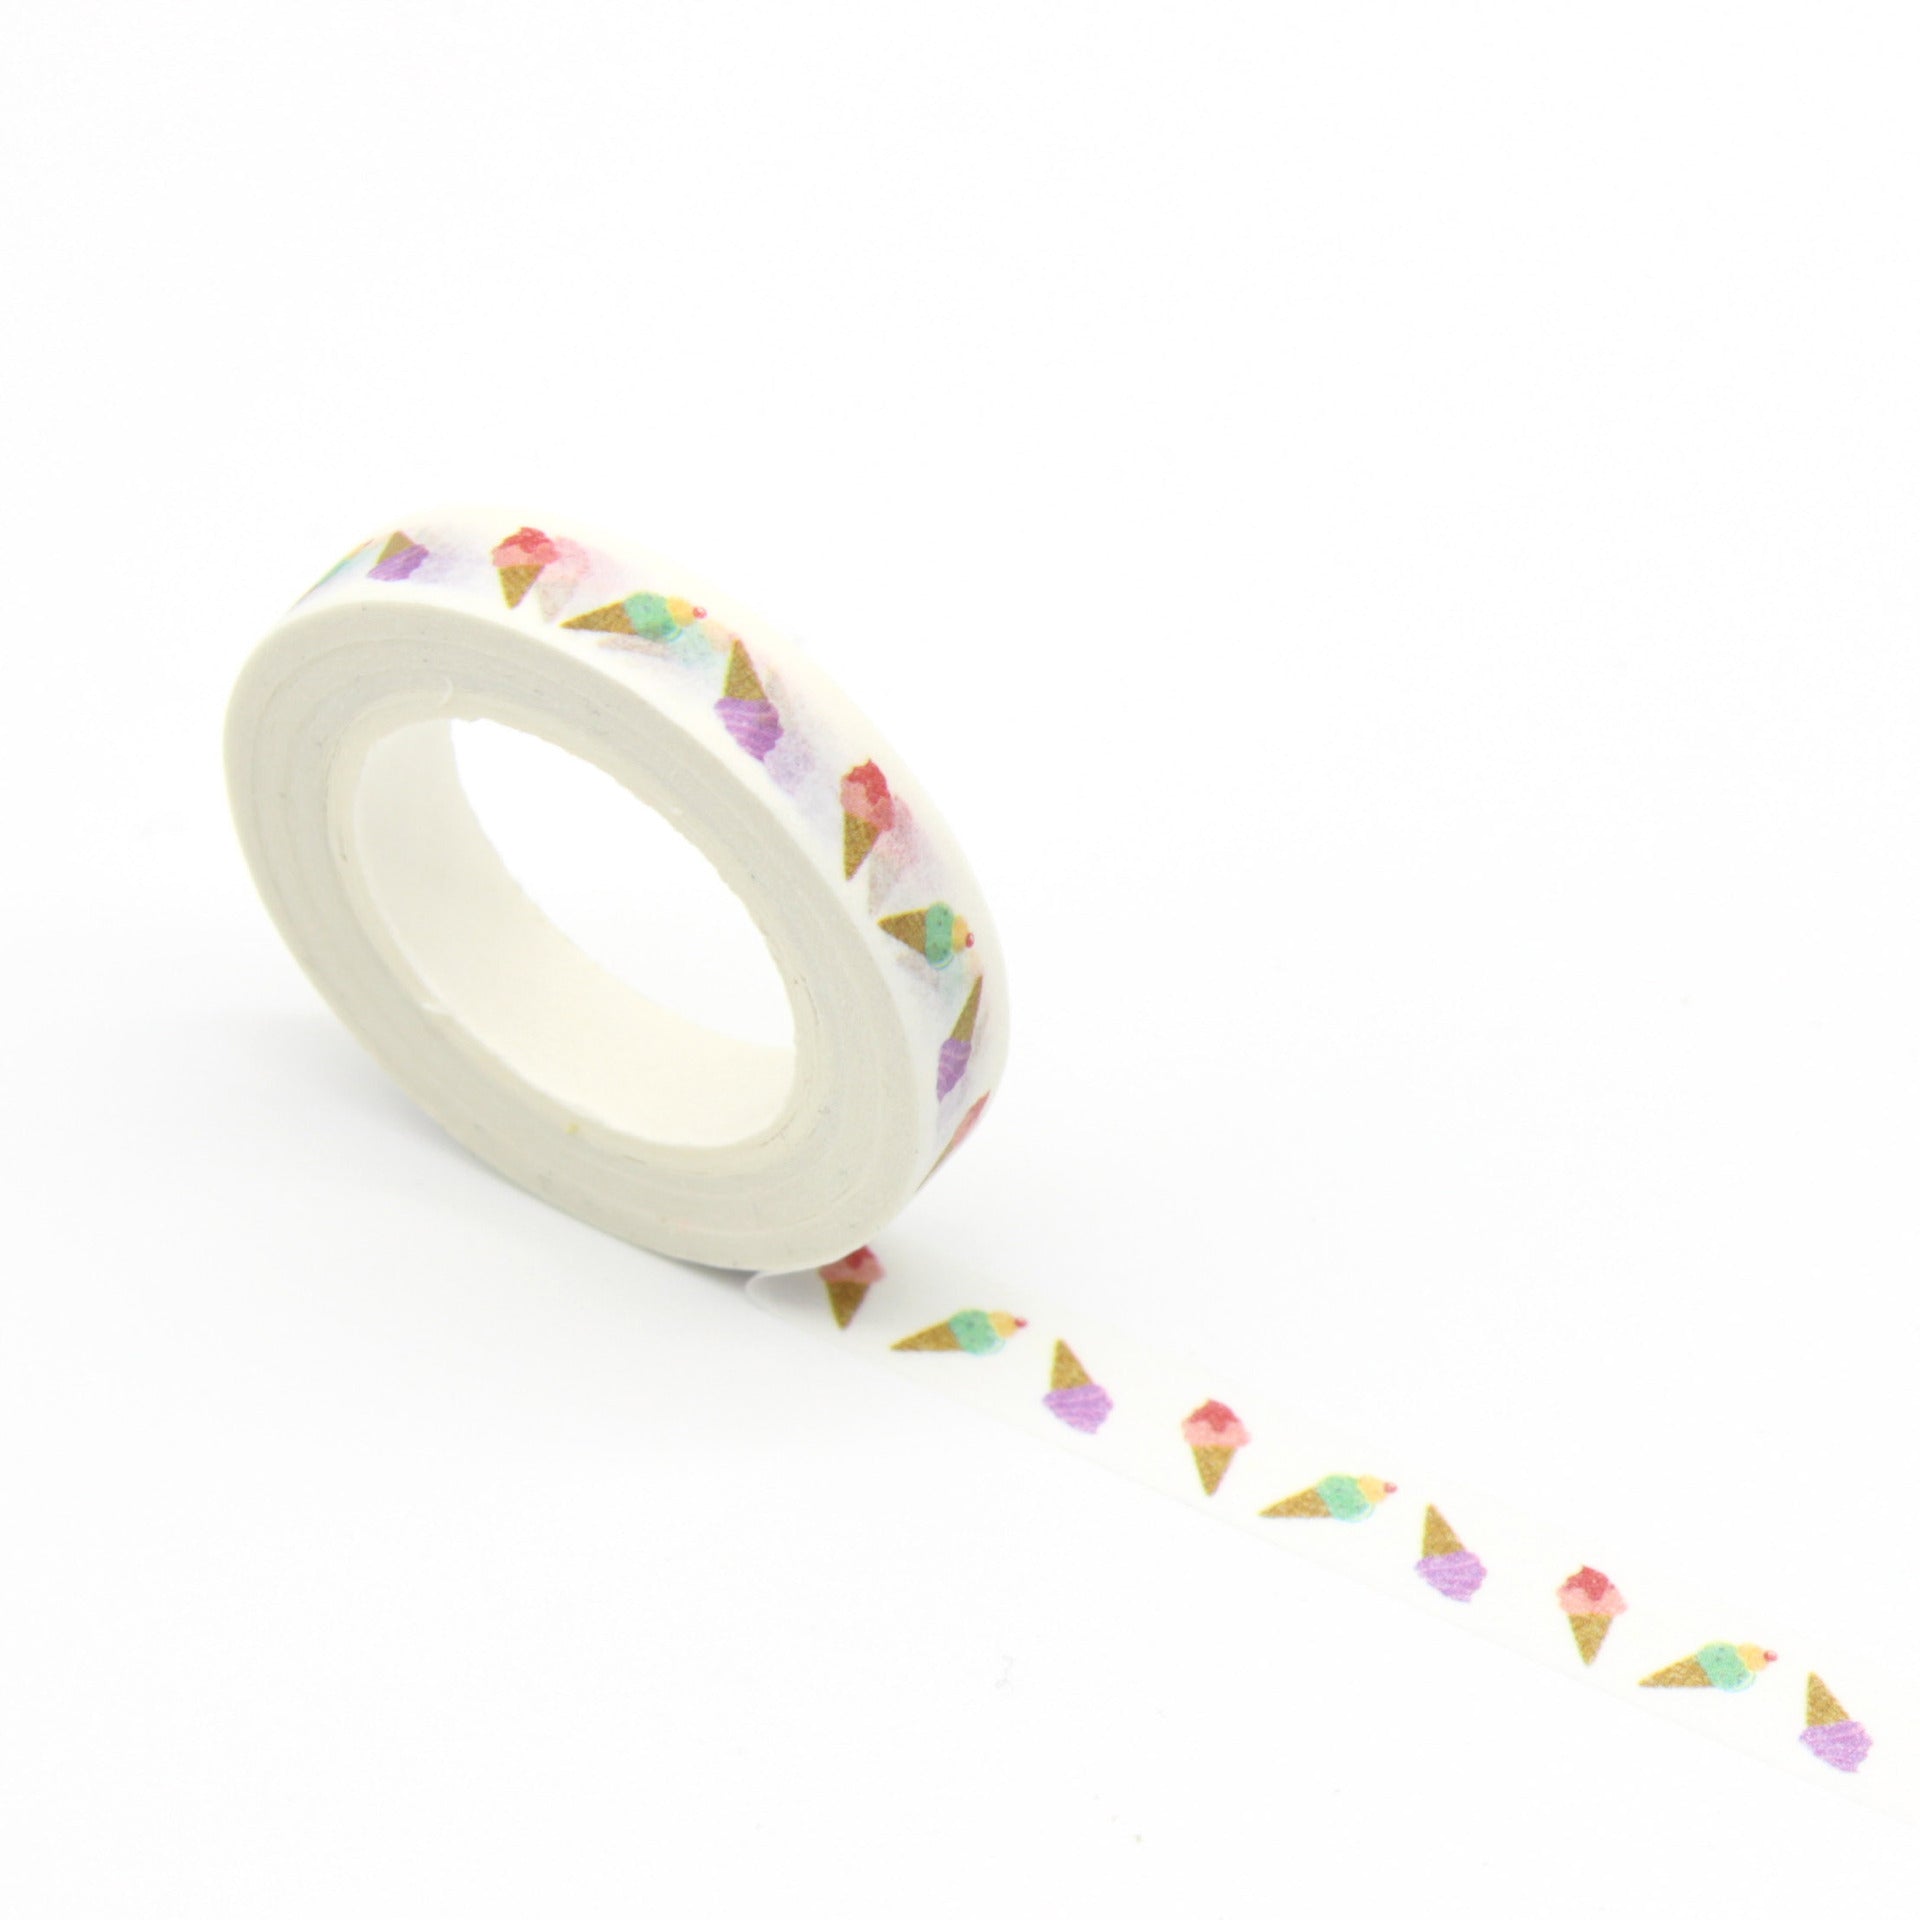 Ice Cream Rainbow Decorative Washi Tape Roll